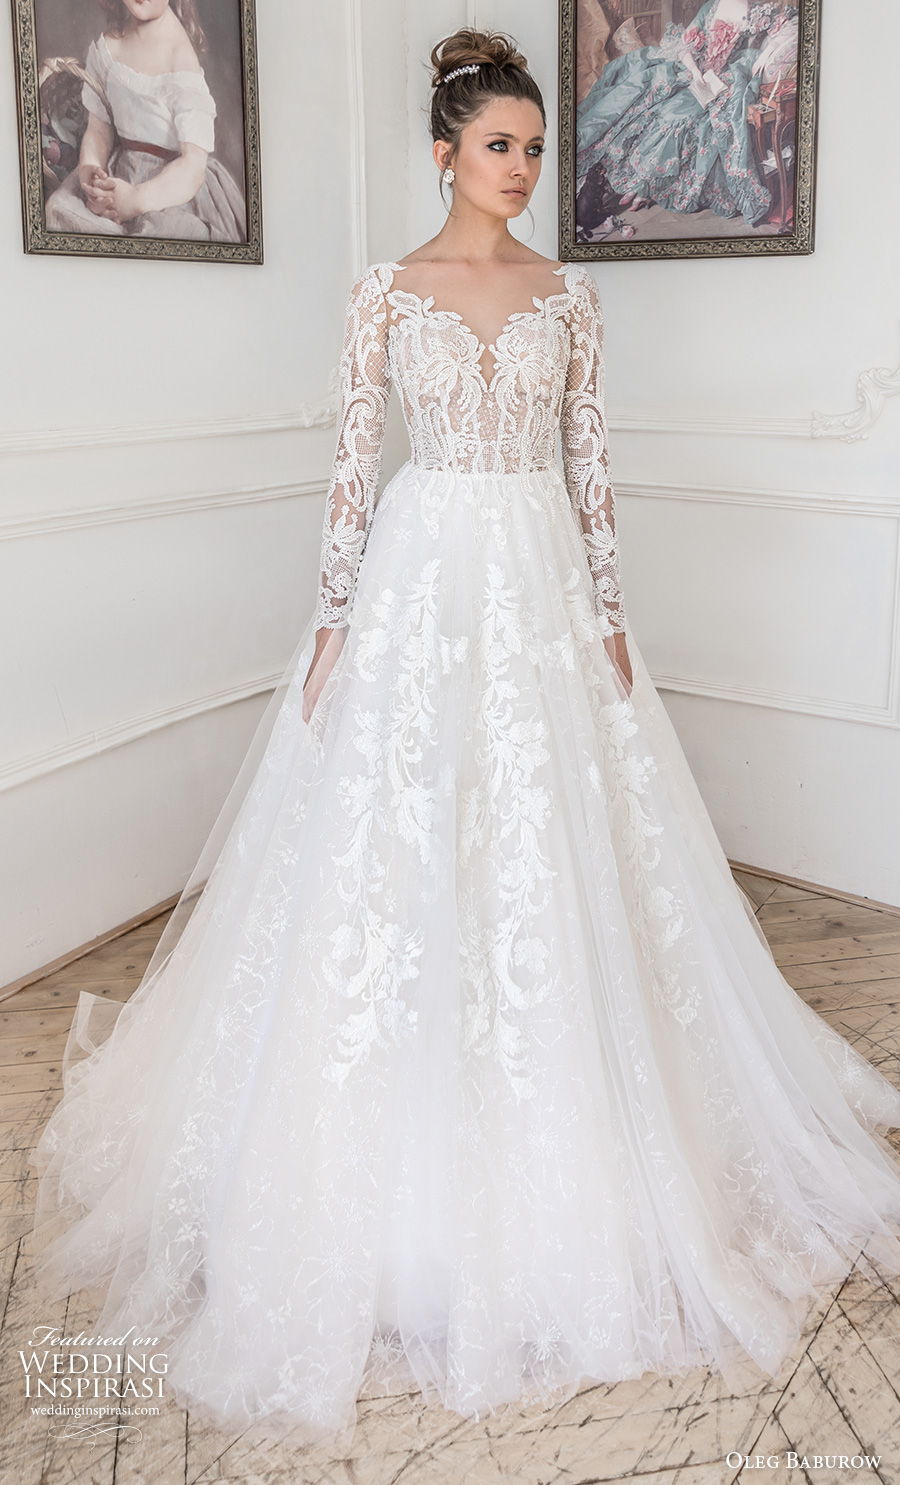 Oleg Baburow 2021 Wedding Dresses — “Light of Your Love” Bridal ...